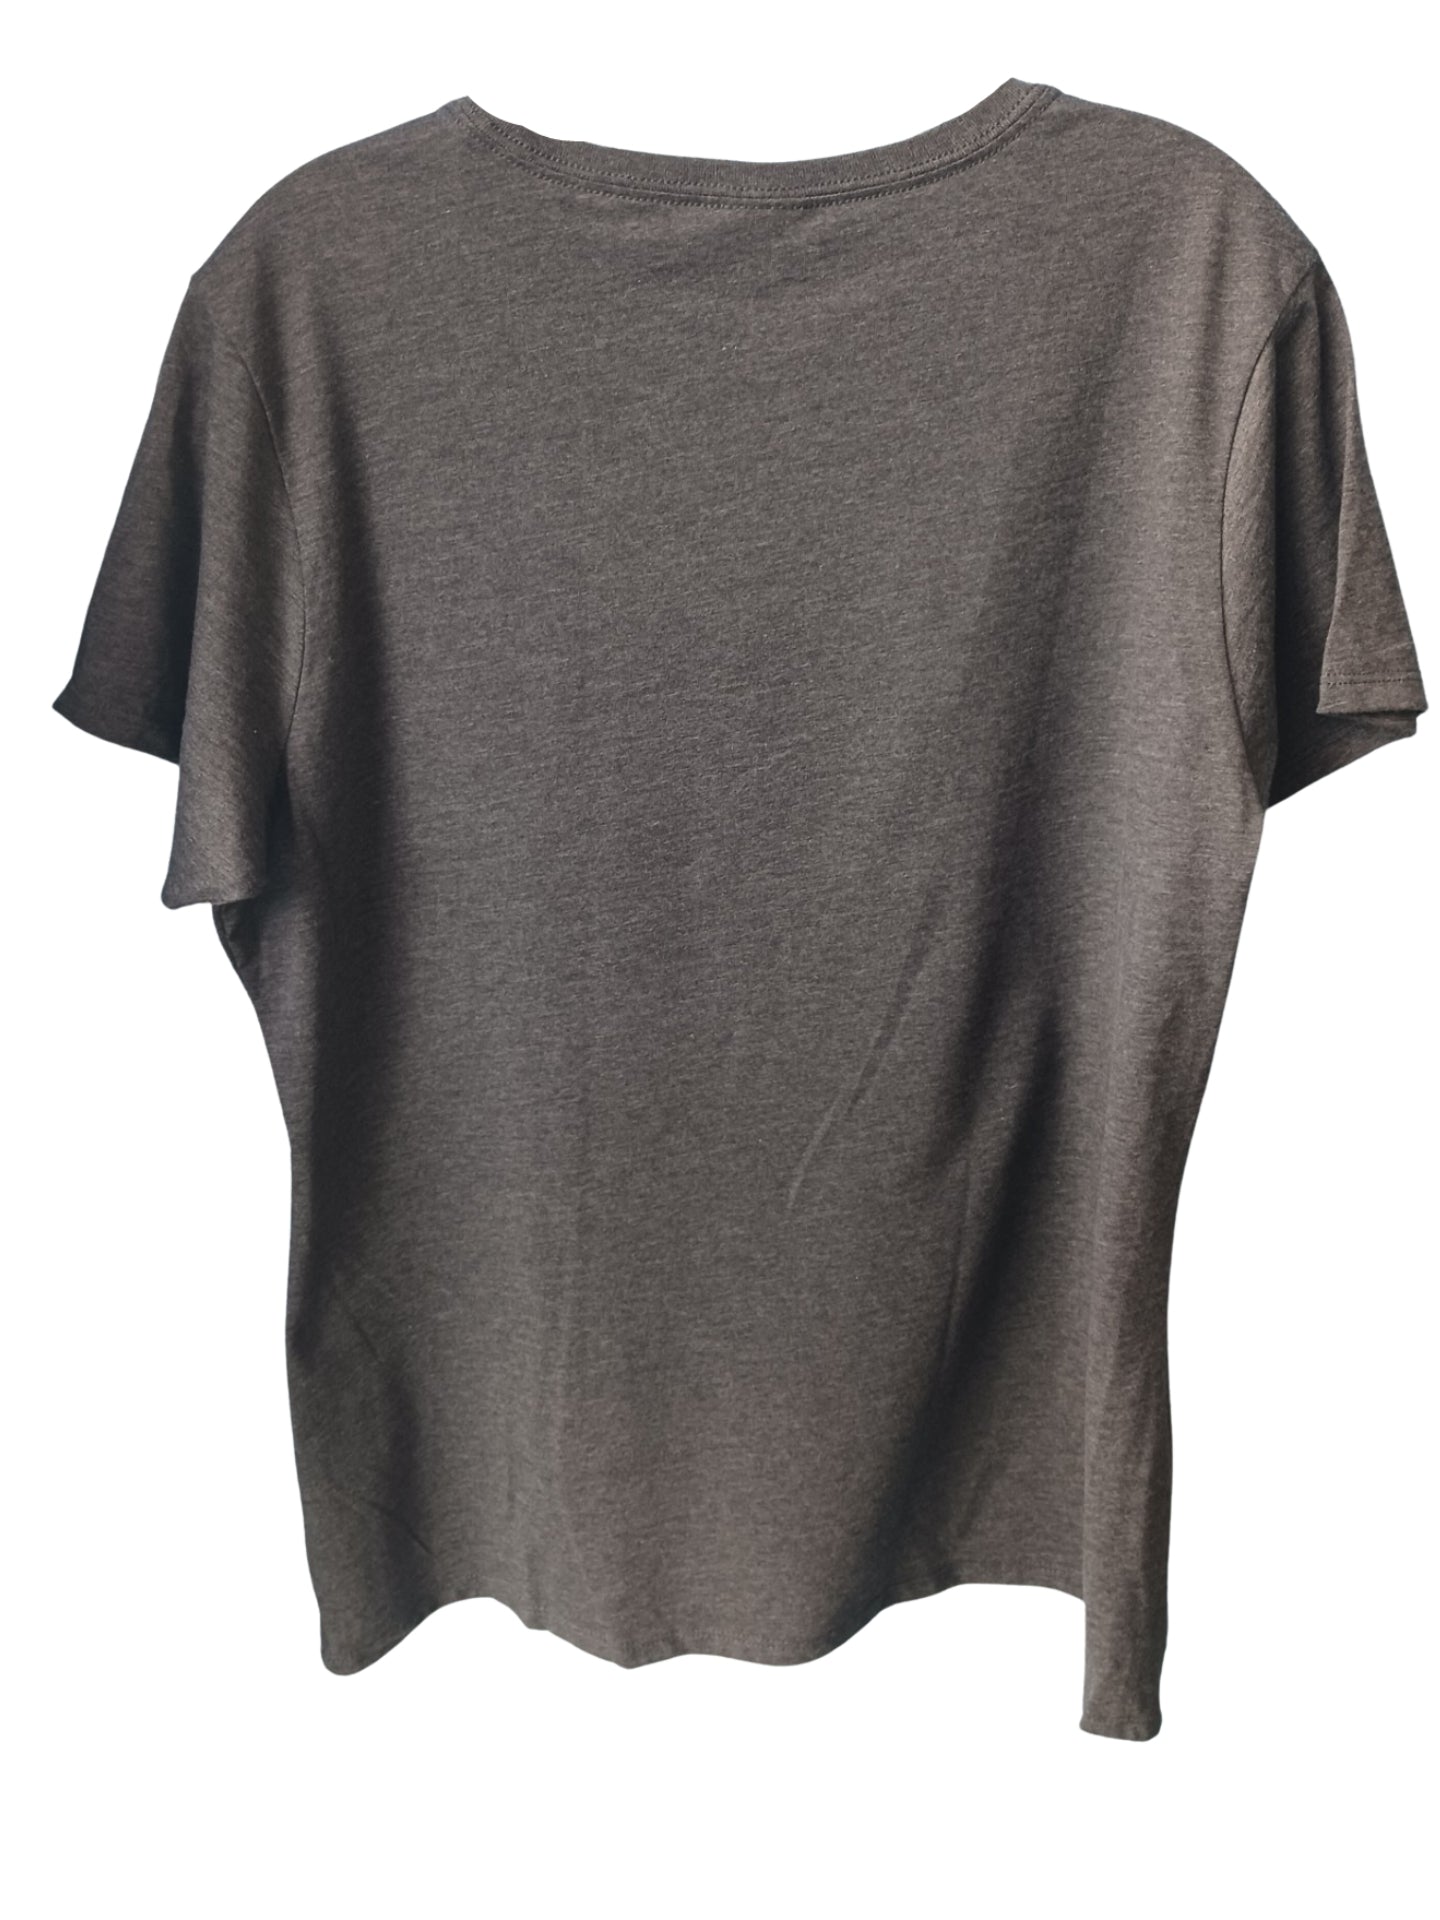 Spirit of 76 Retro T-Shirt, Size XL